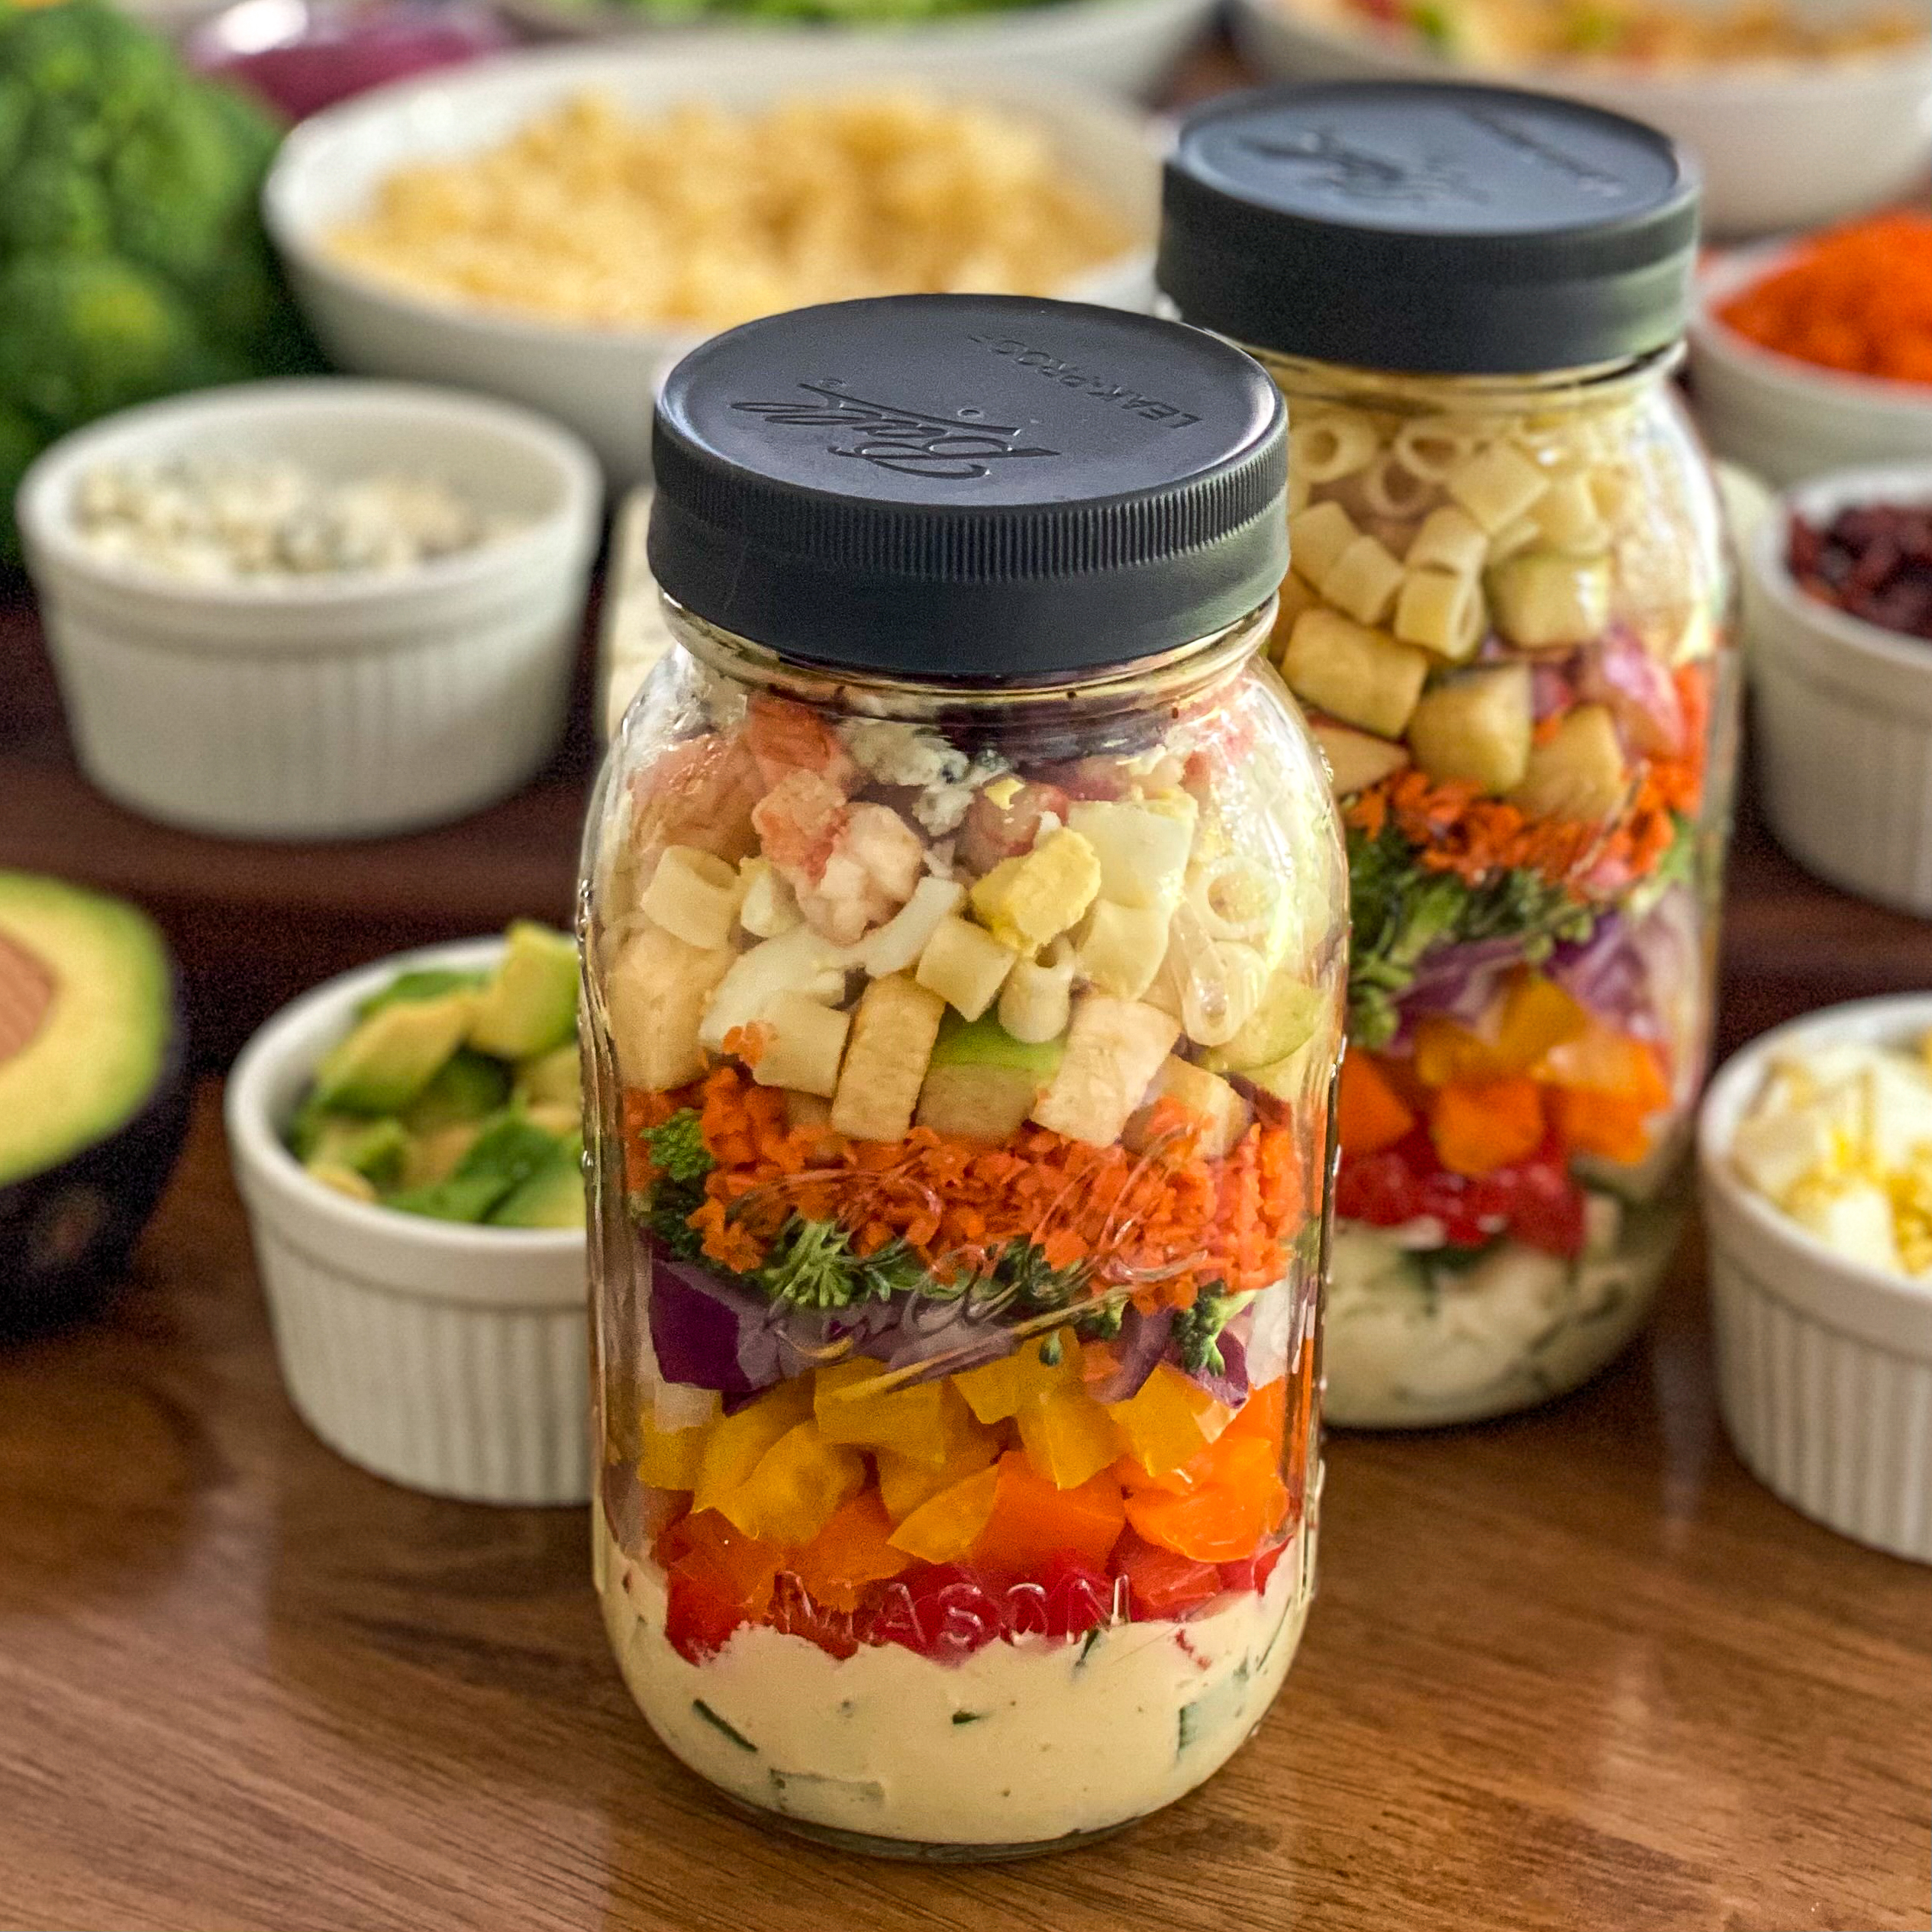 Mason Jar Salad Recipes, 1500-1800 Calories